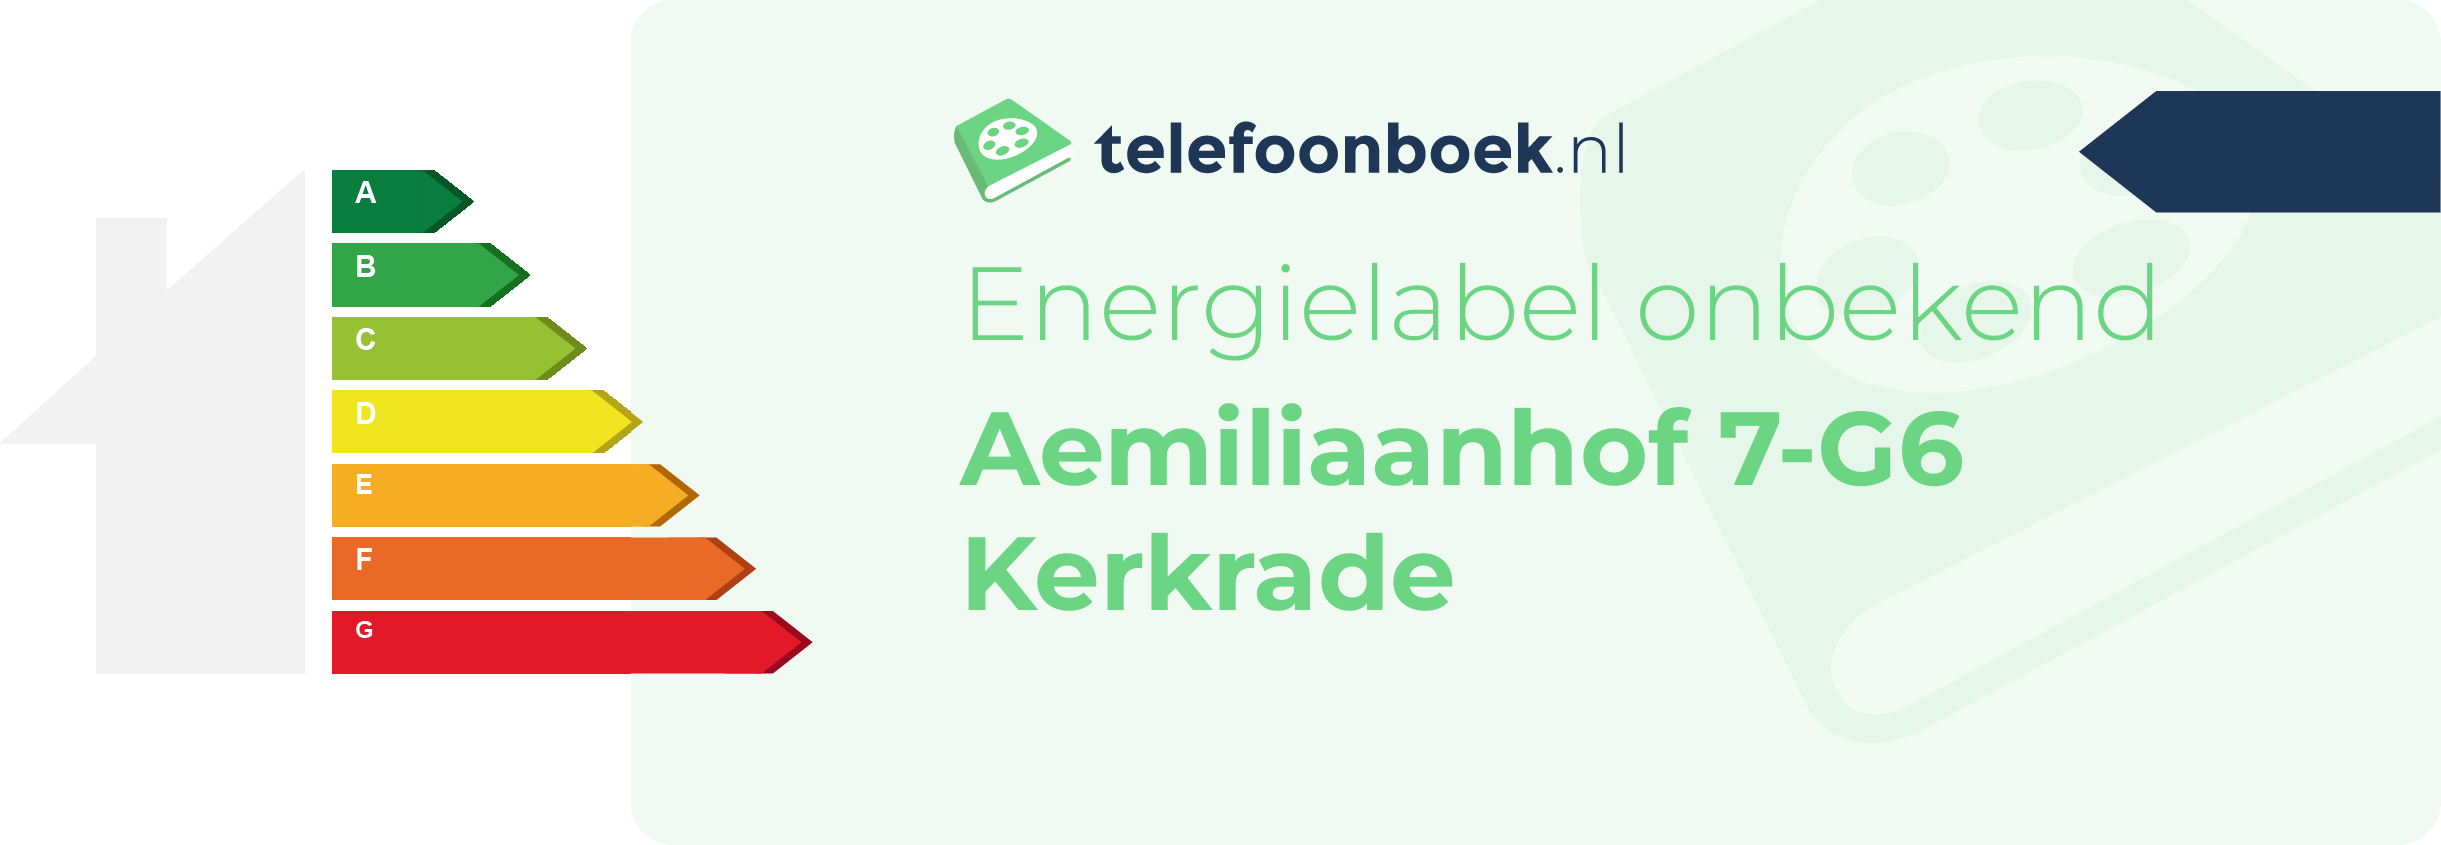 Energielabel Aemiliaanhof 7-G6 Kerkrade